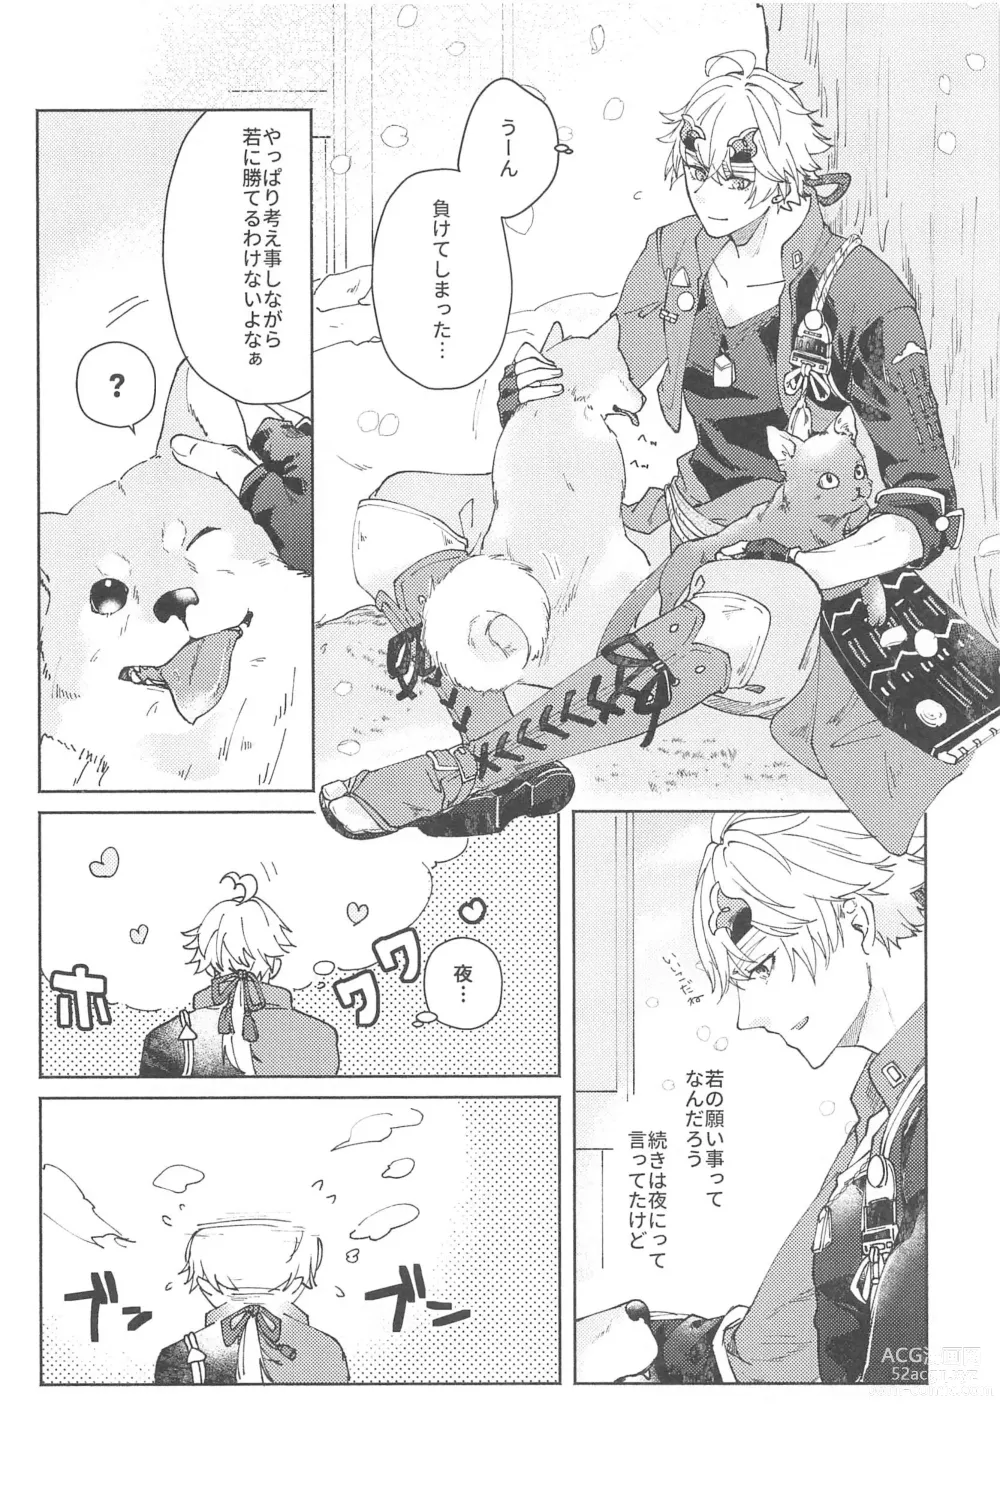 Page 17 of doujinshi Zenbu Kimi no Mono